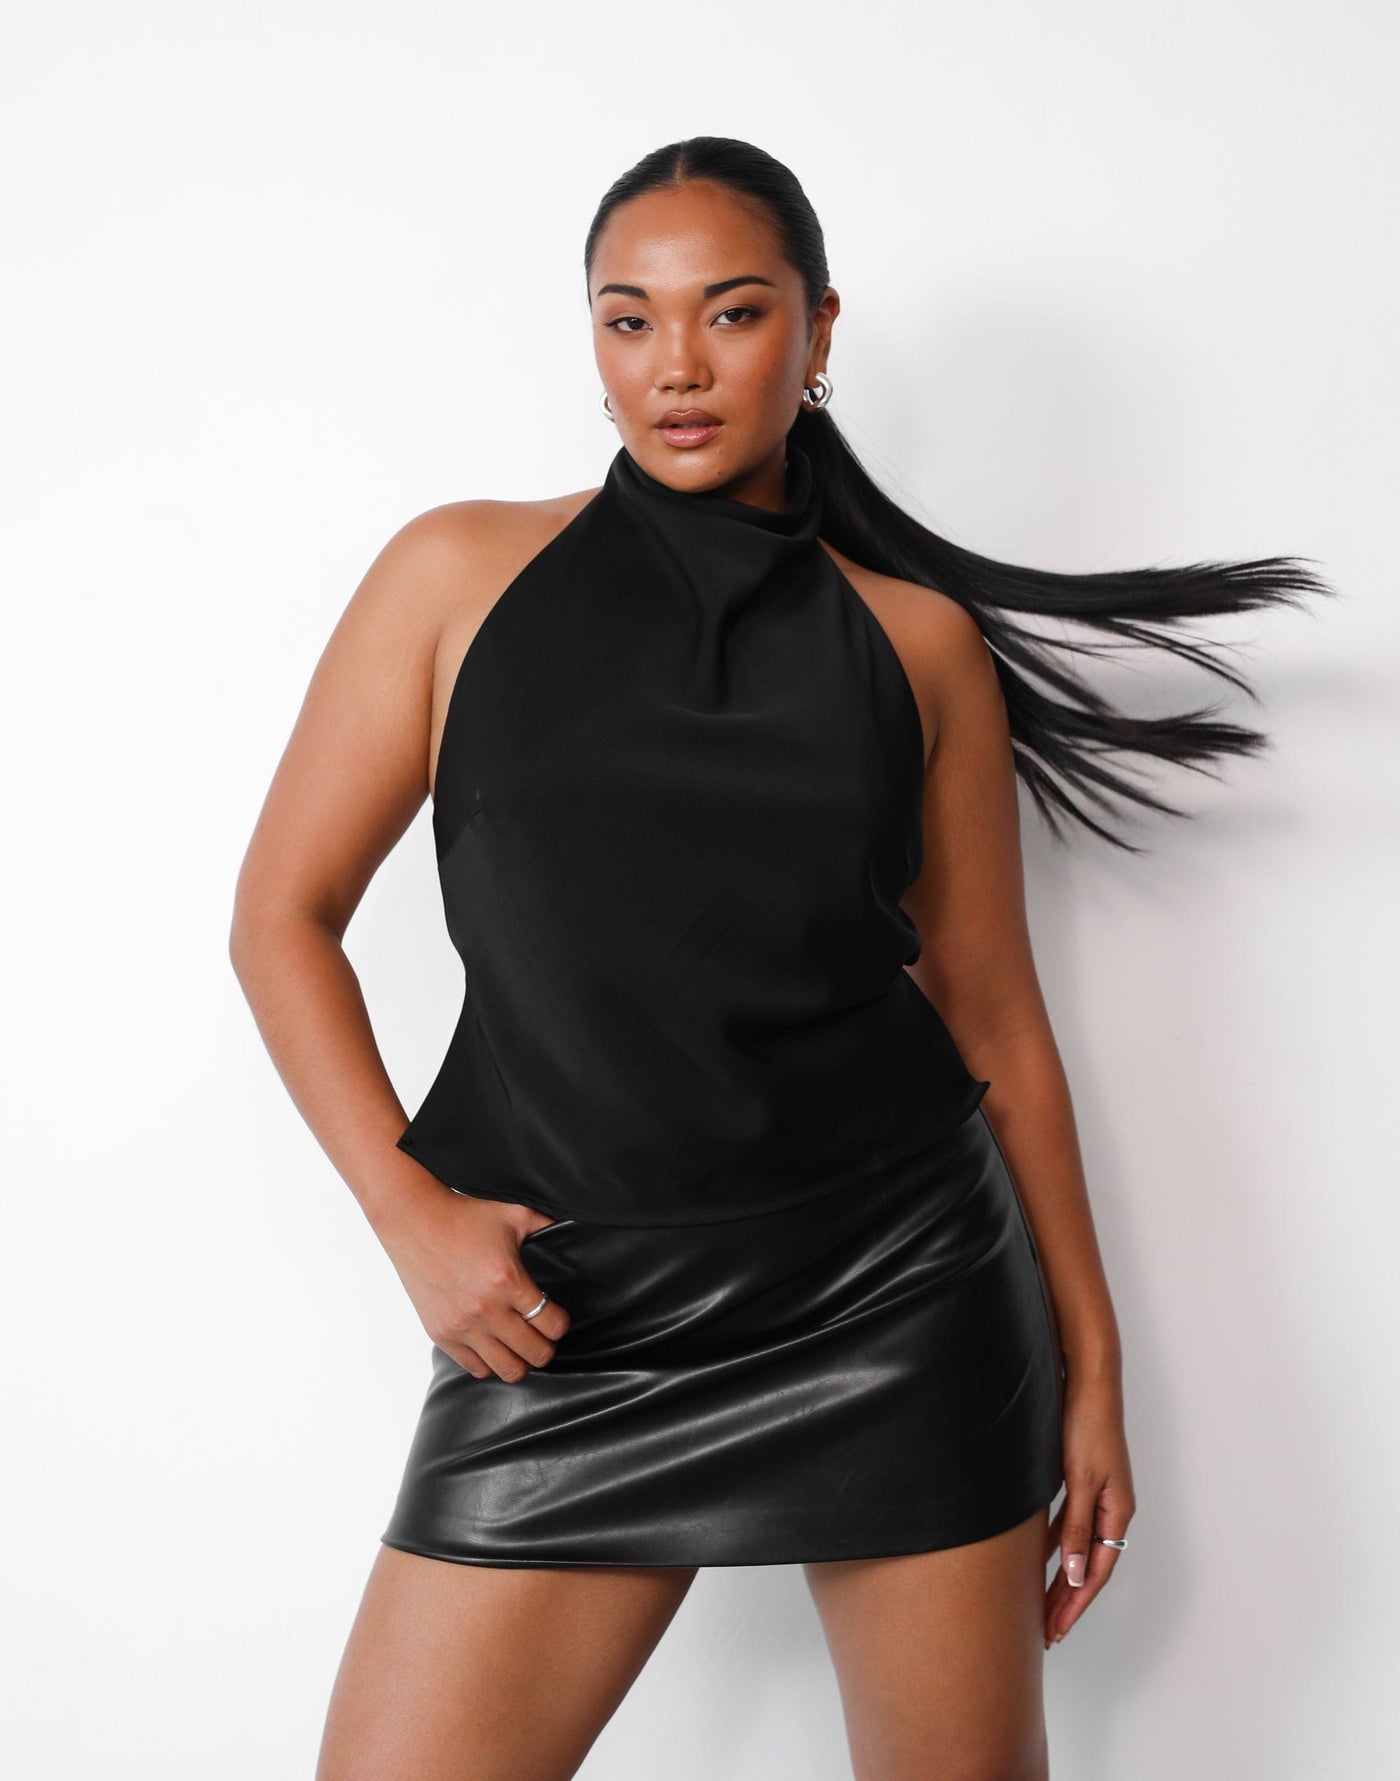 Paris Mini Skirt (Black) | Charcoal Clothing Exclusive - Zipper Closure Lined Faux Leather Mini Skirt - Women's Skirt - Charcoal Clothing